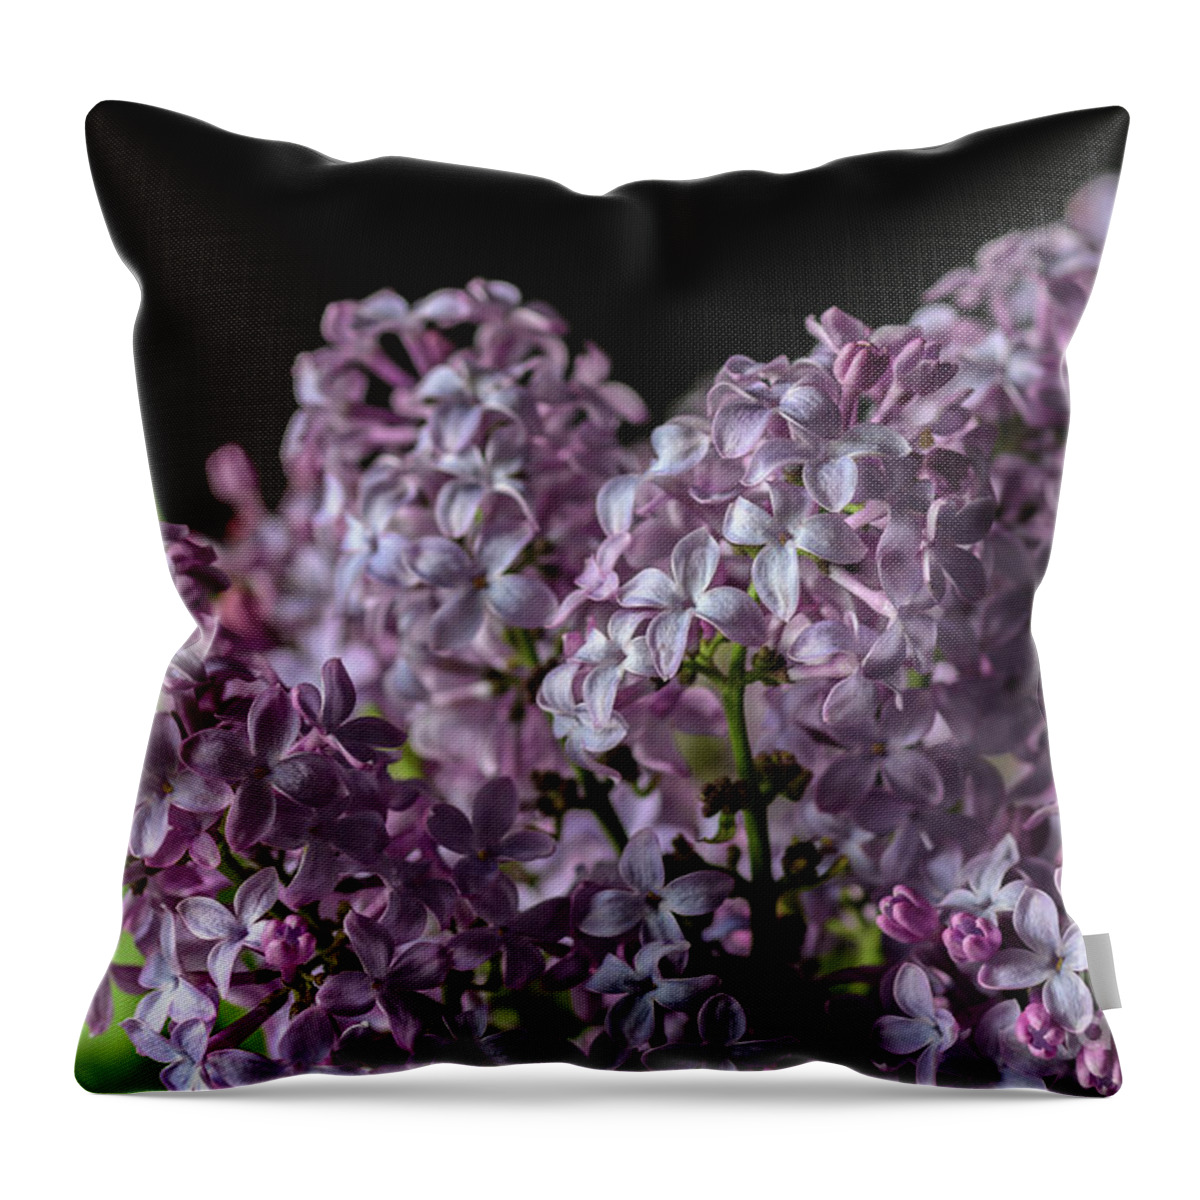 Lilacs Throw Pillow featuring the photograph Bouquet of Lilacs by Tamara Becker